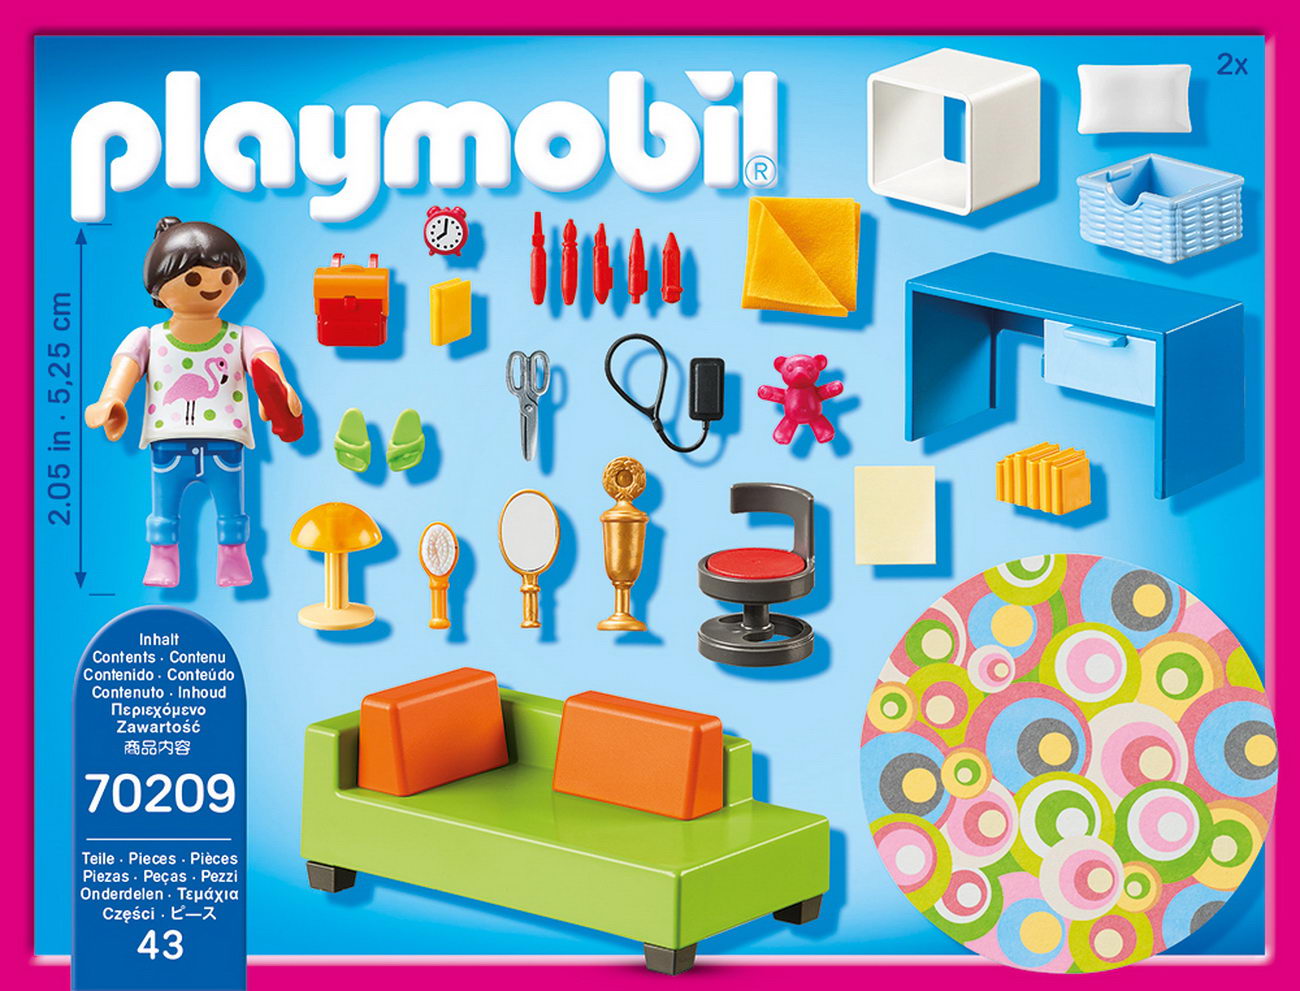 Playmobil 70209 - Jugendzimmer (Dollhouse)